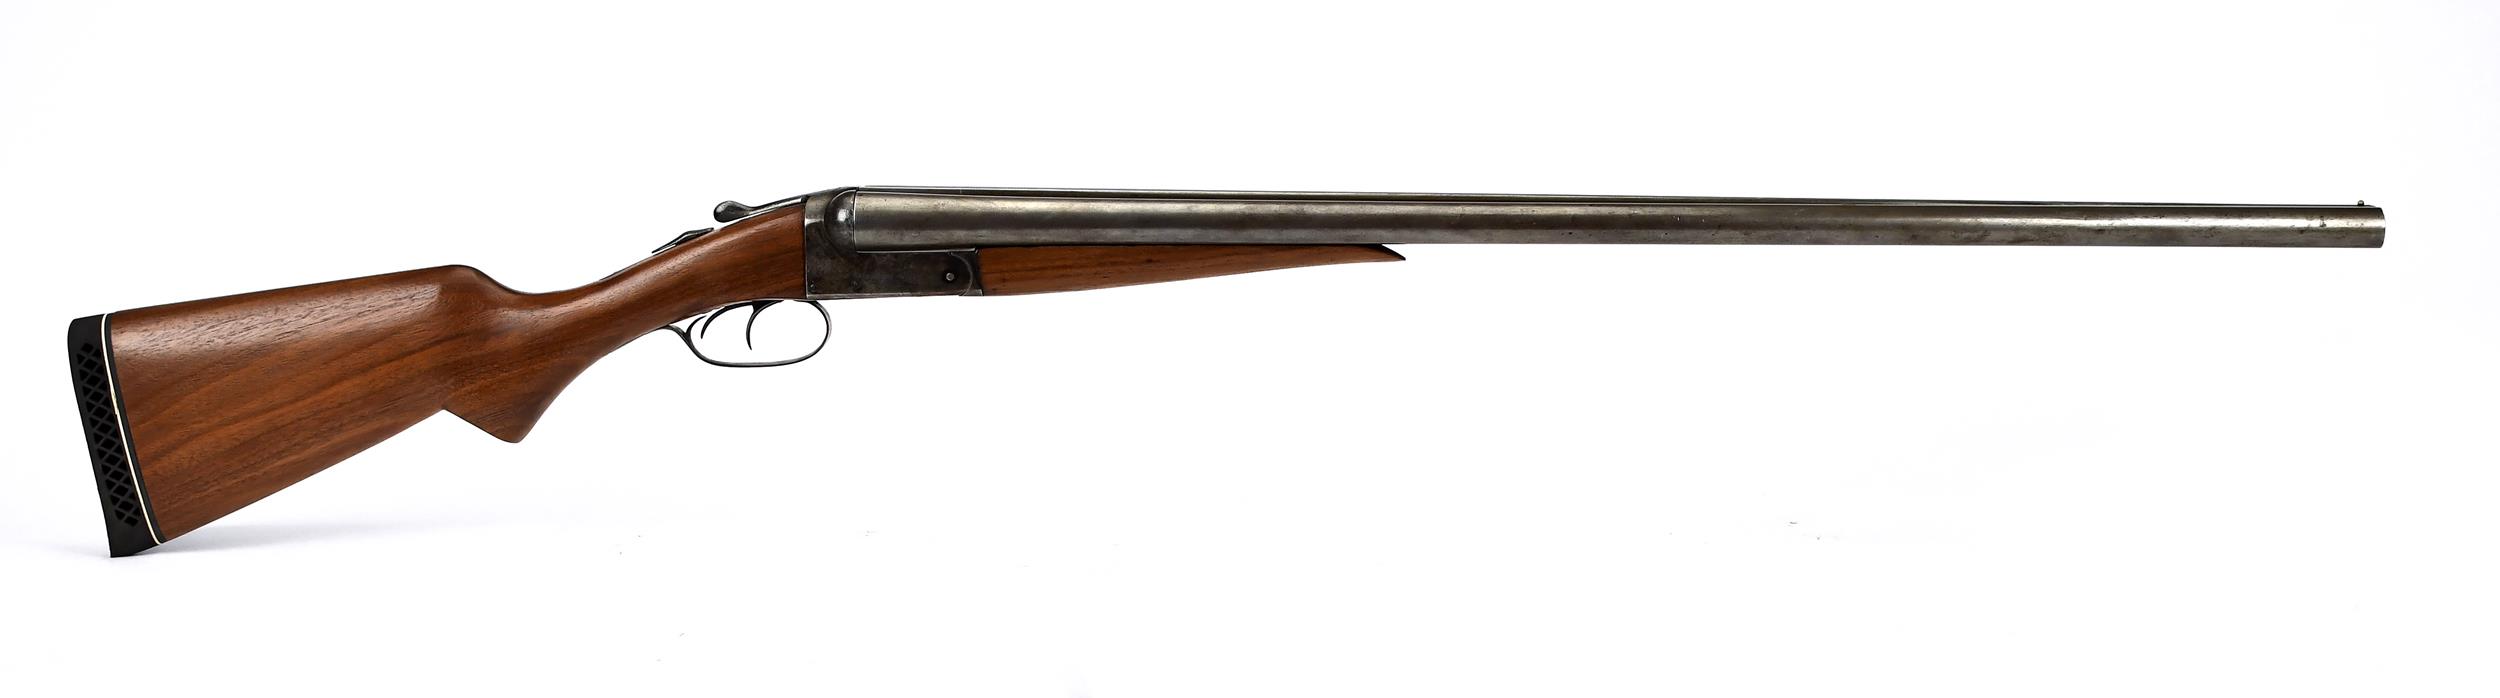 REMINGTON MODEL 19, 12 GAUGE. Remington